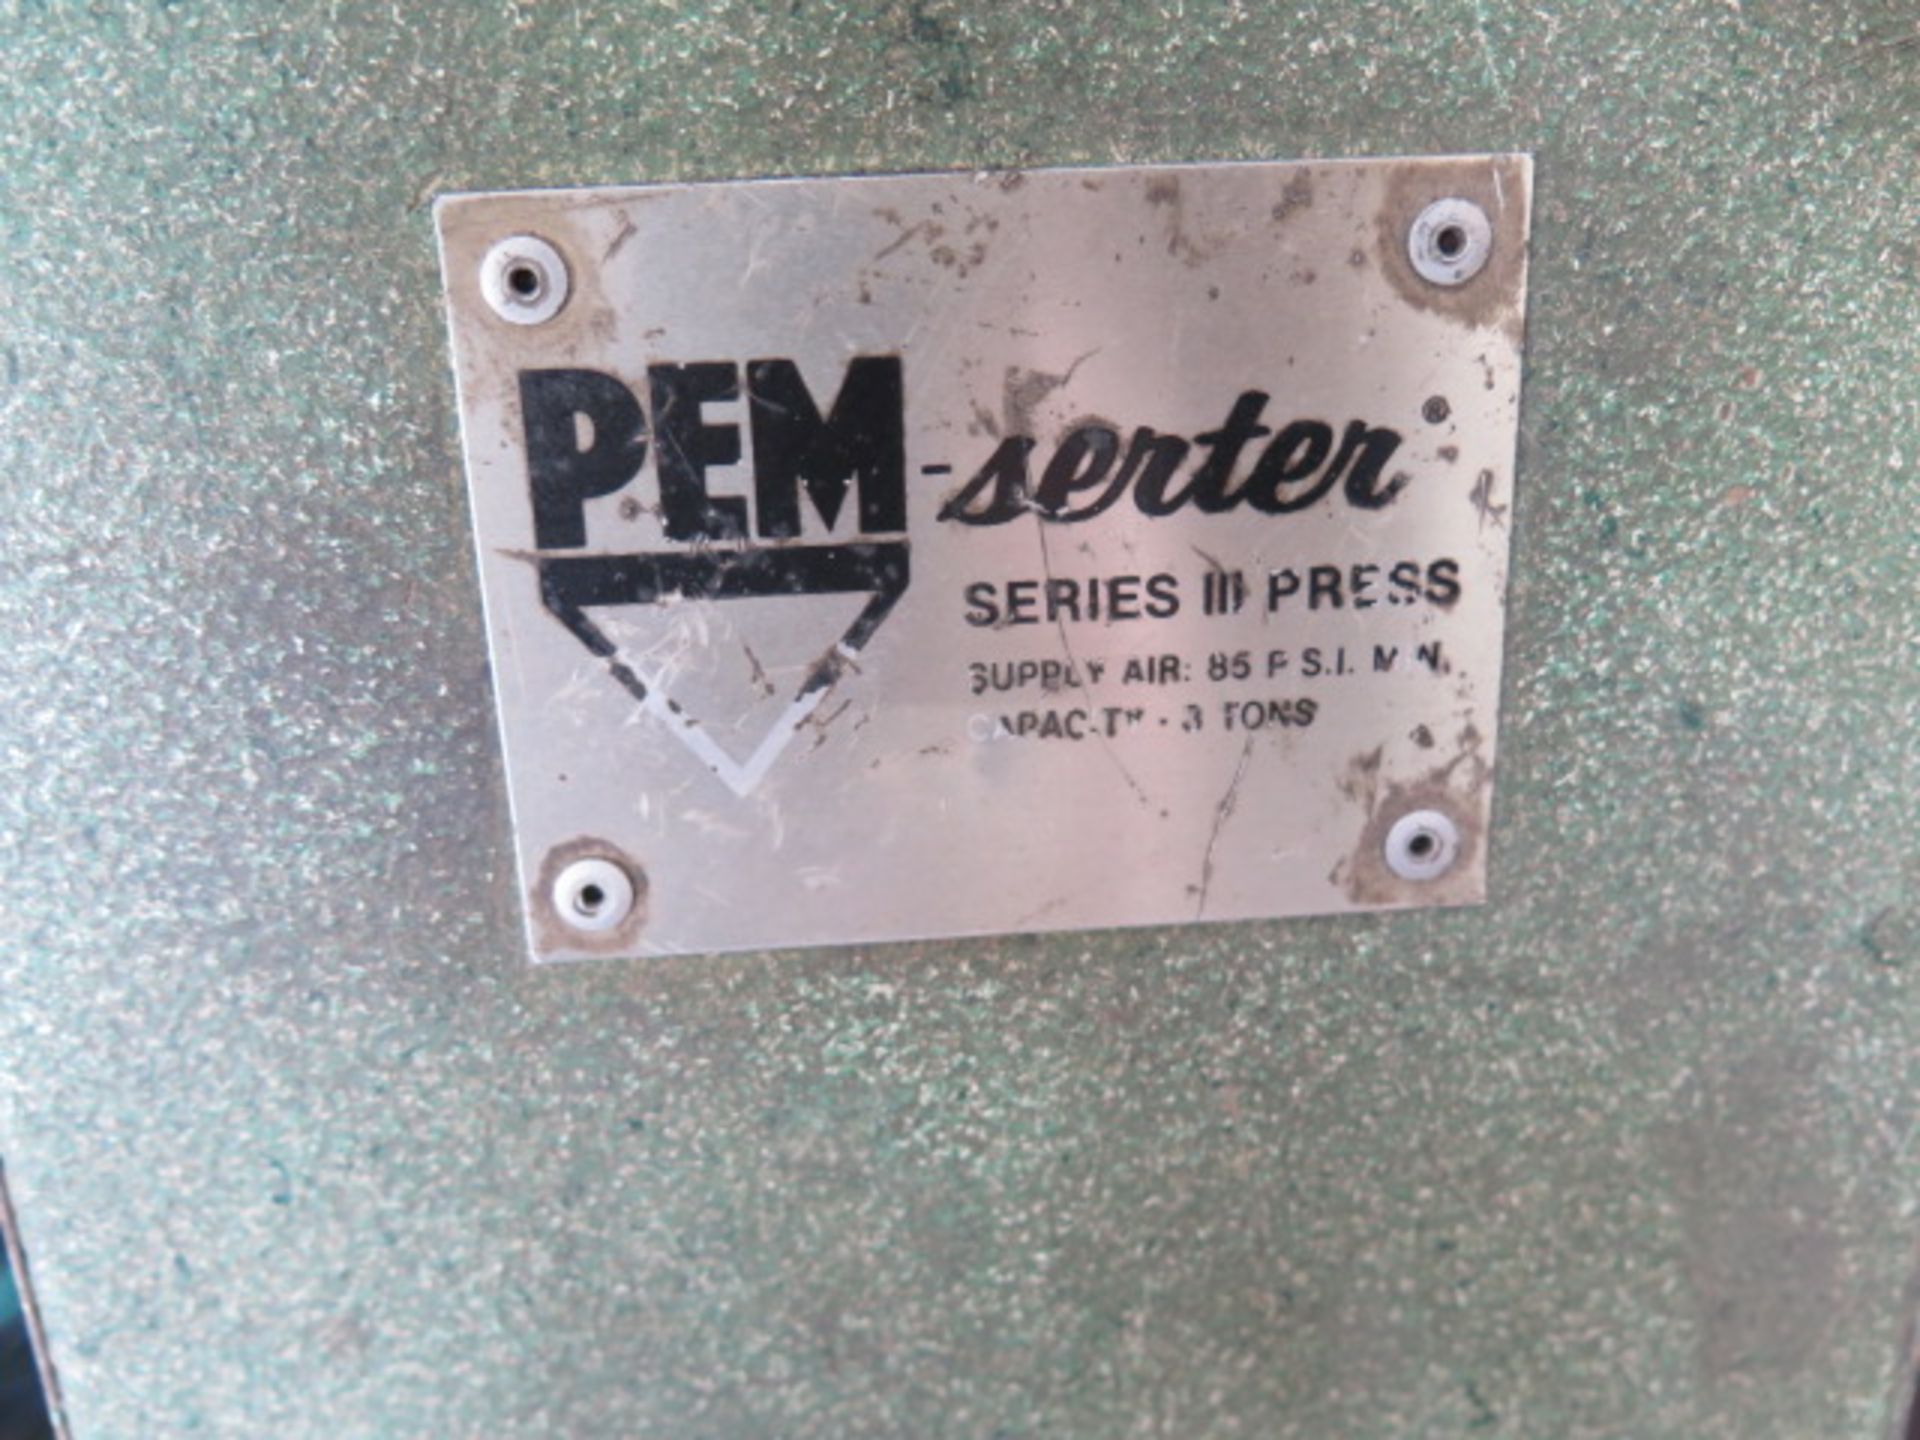 PEM-Serter mdl. Series III 3-Ton Hardware Insertion Press s/n B3-065 w/ 18" Throat, Stand - Image 2 of 4